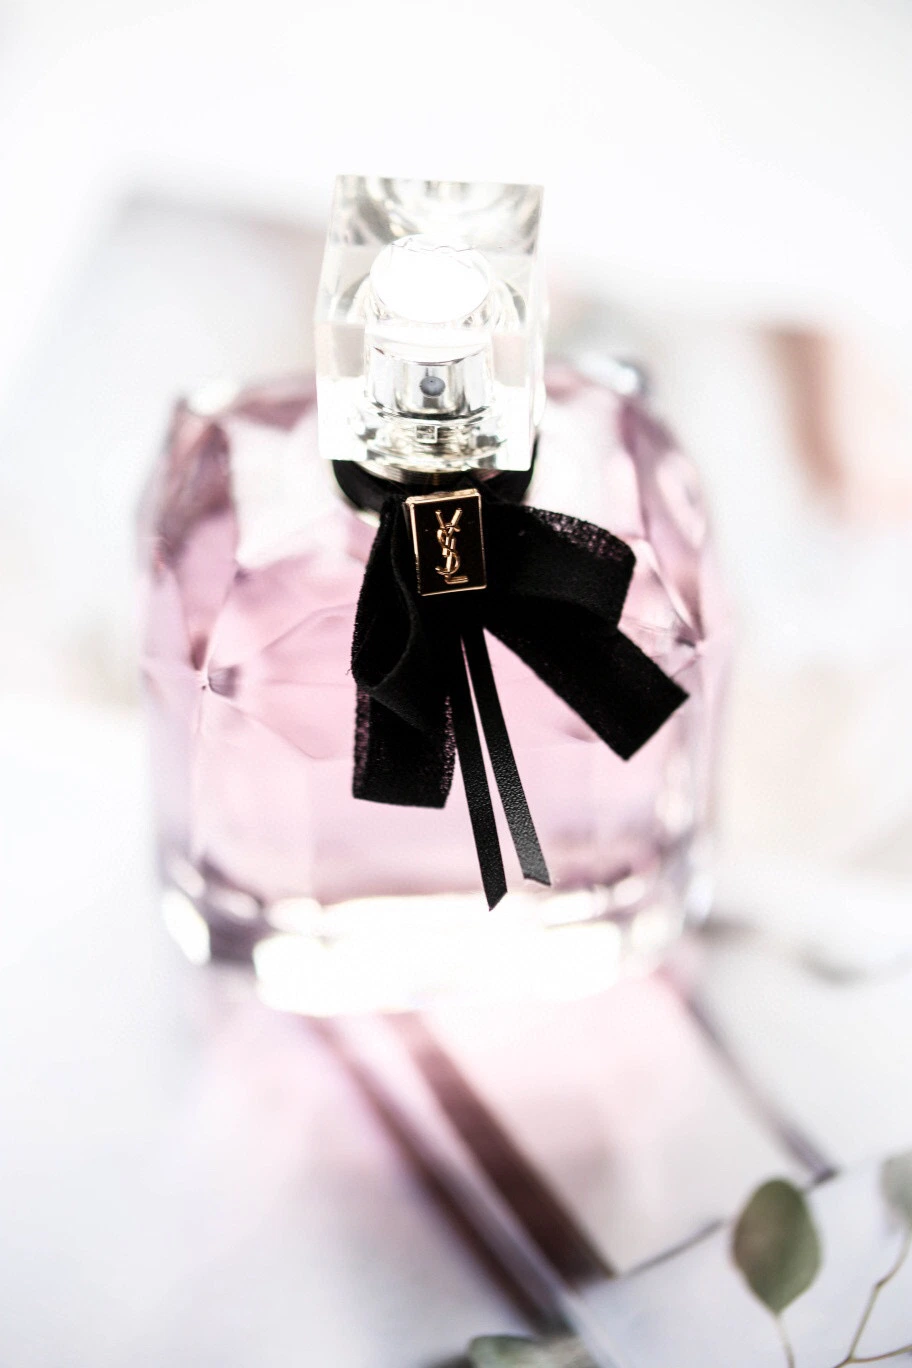 Luxury Brand Reversed Paris Perfume. Copy The Original Quality Fragrance and Keep The Money